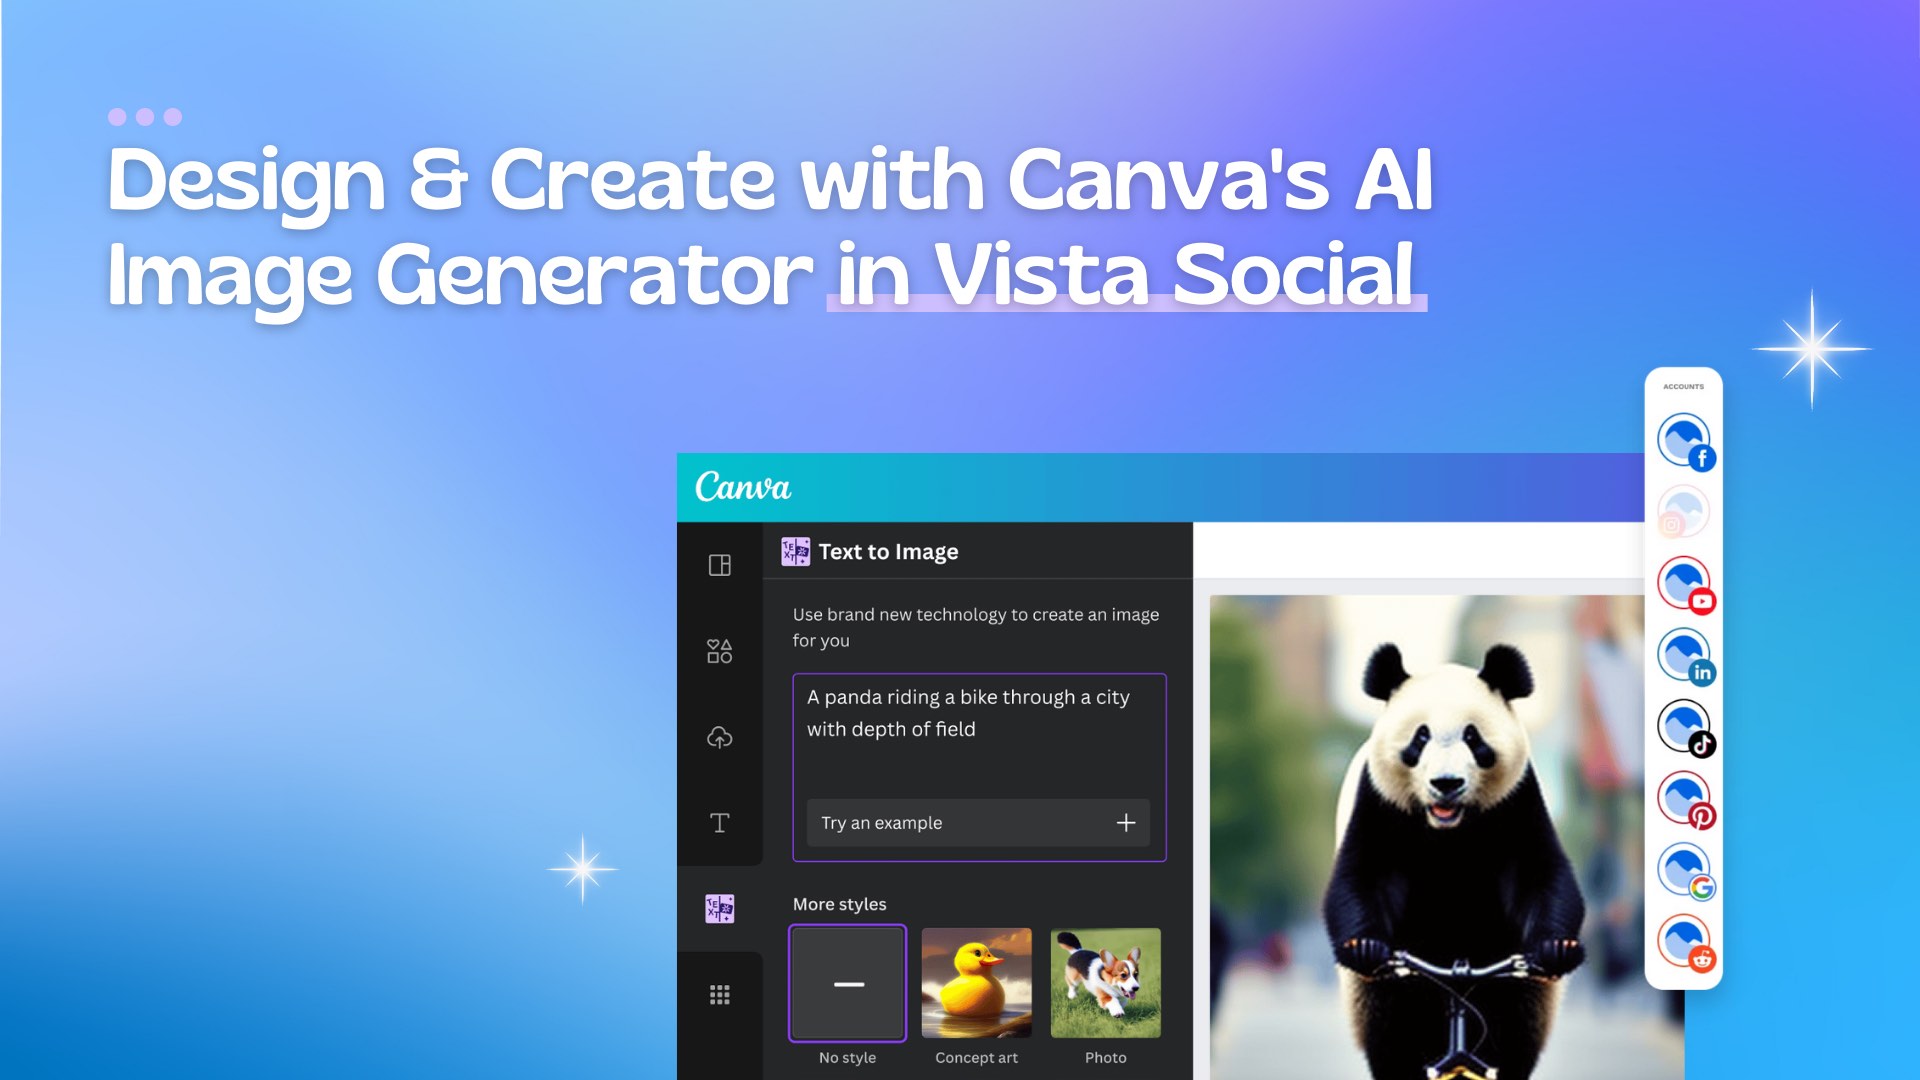 Design & Create with Canva’s AI Image Generator in Vista Social